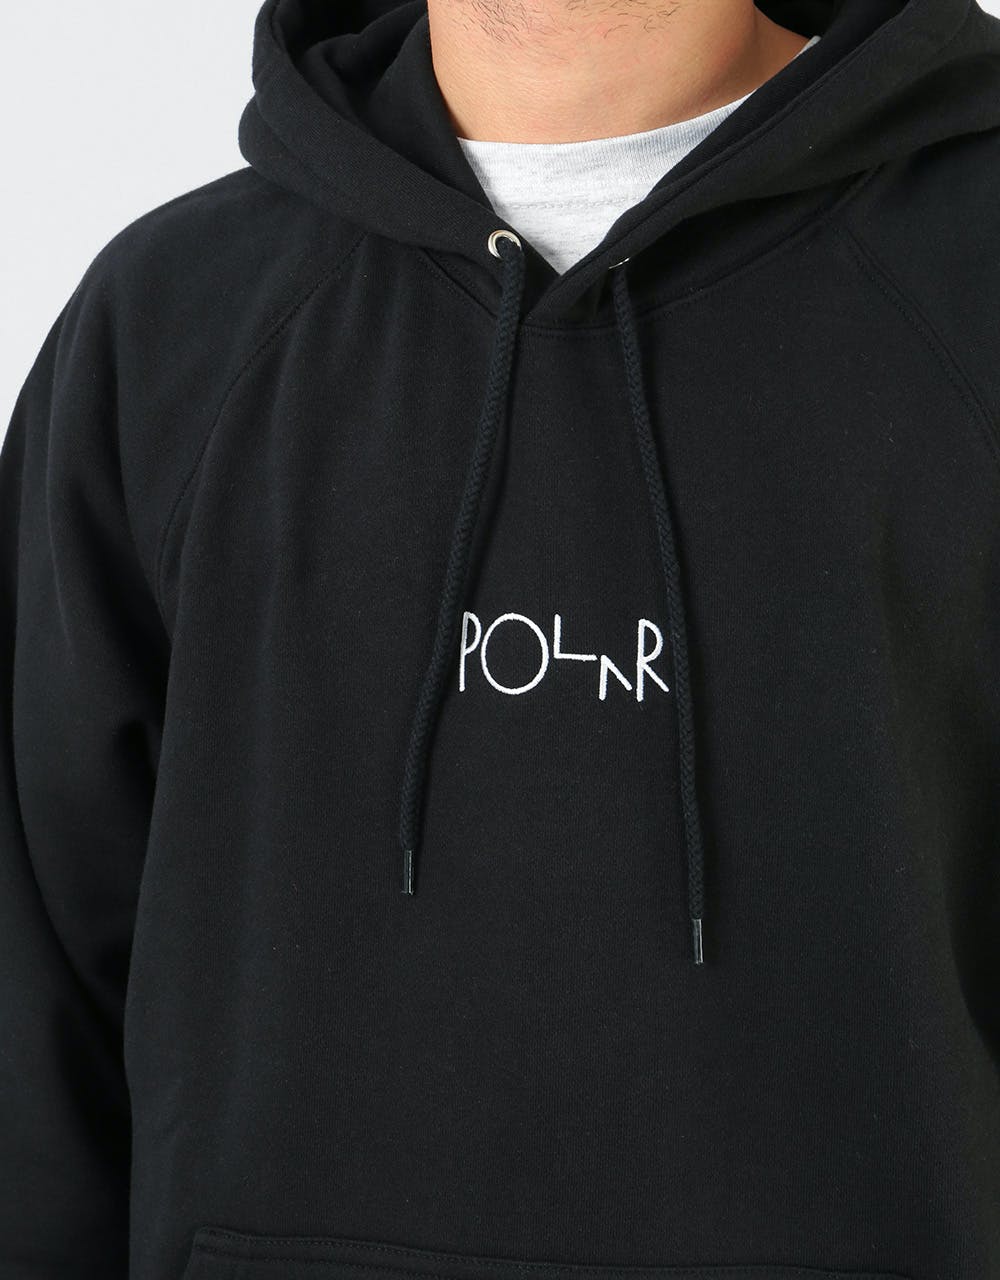 Polar Default Pullover Hoodie - Black